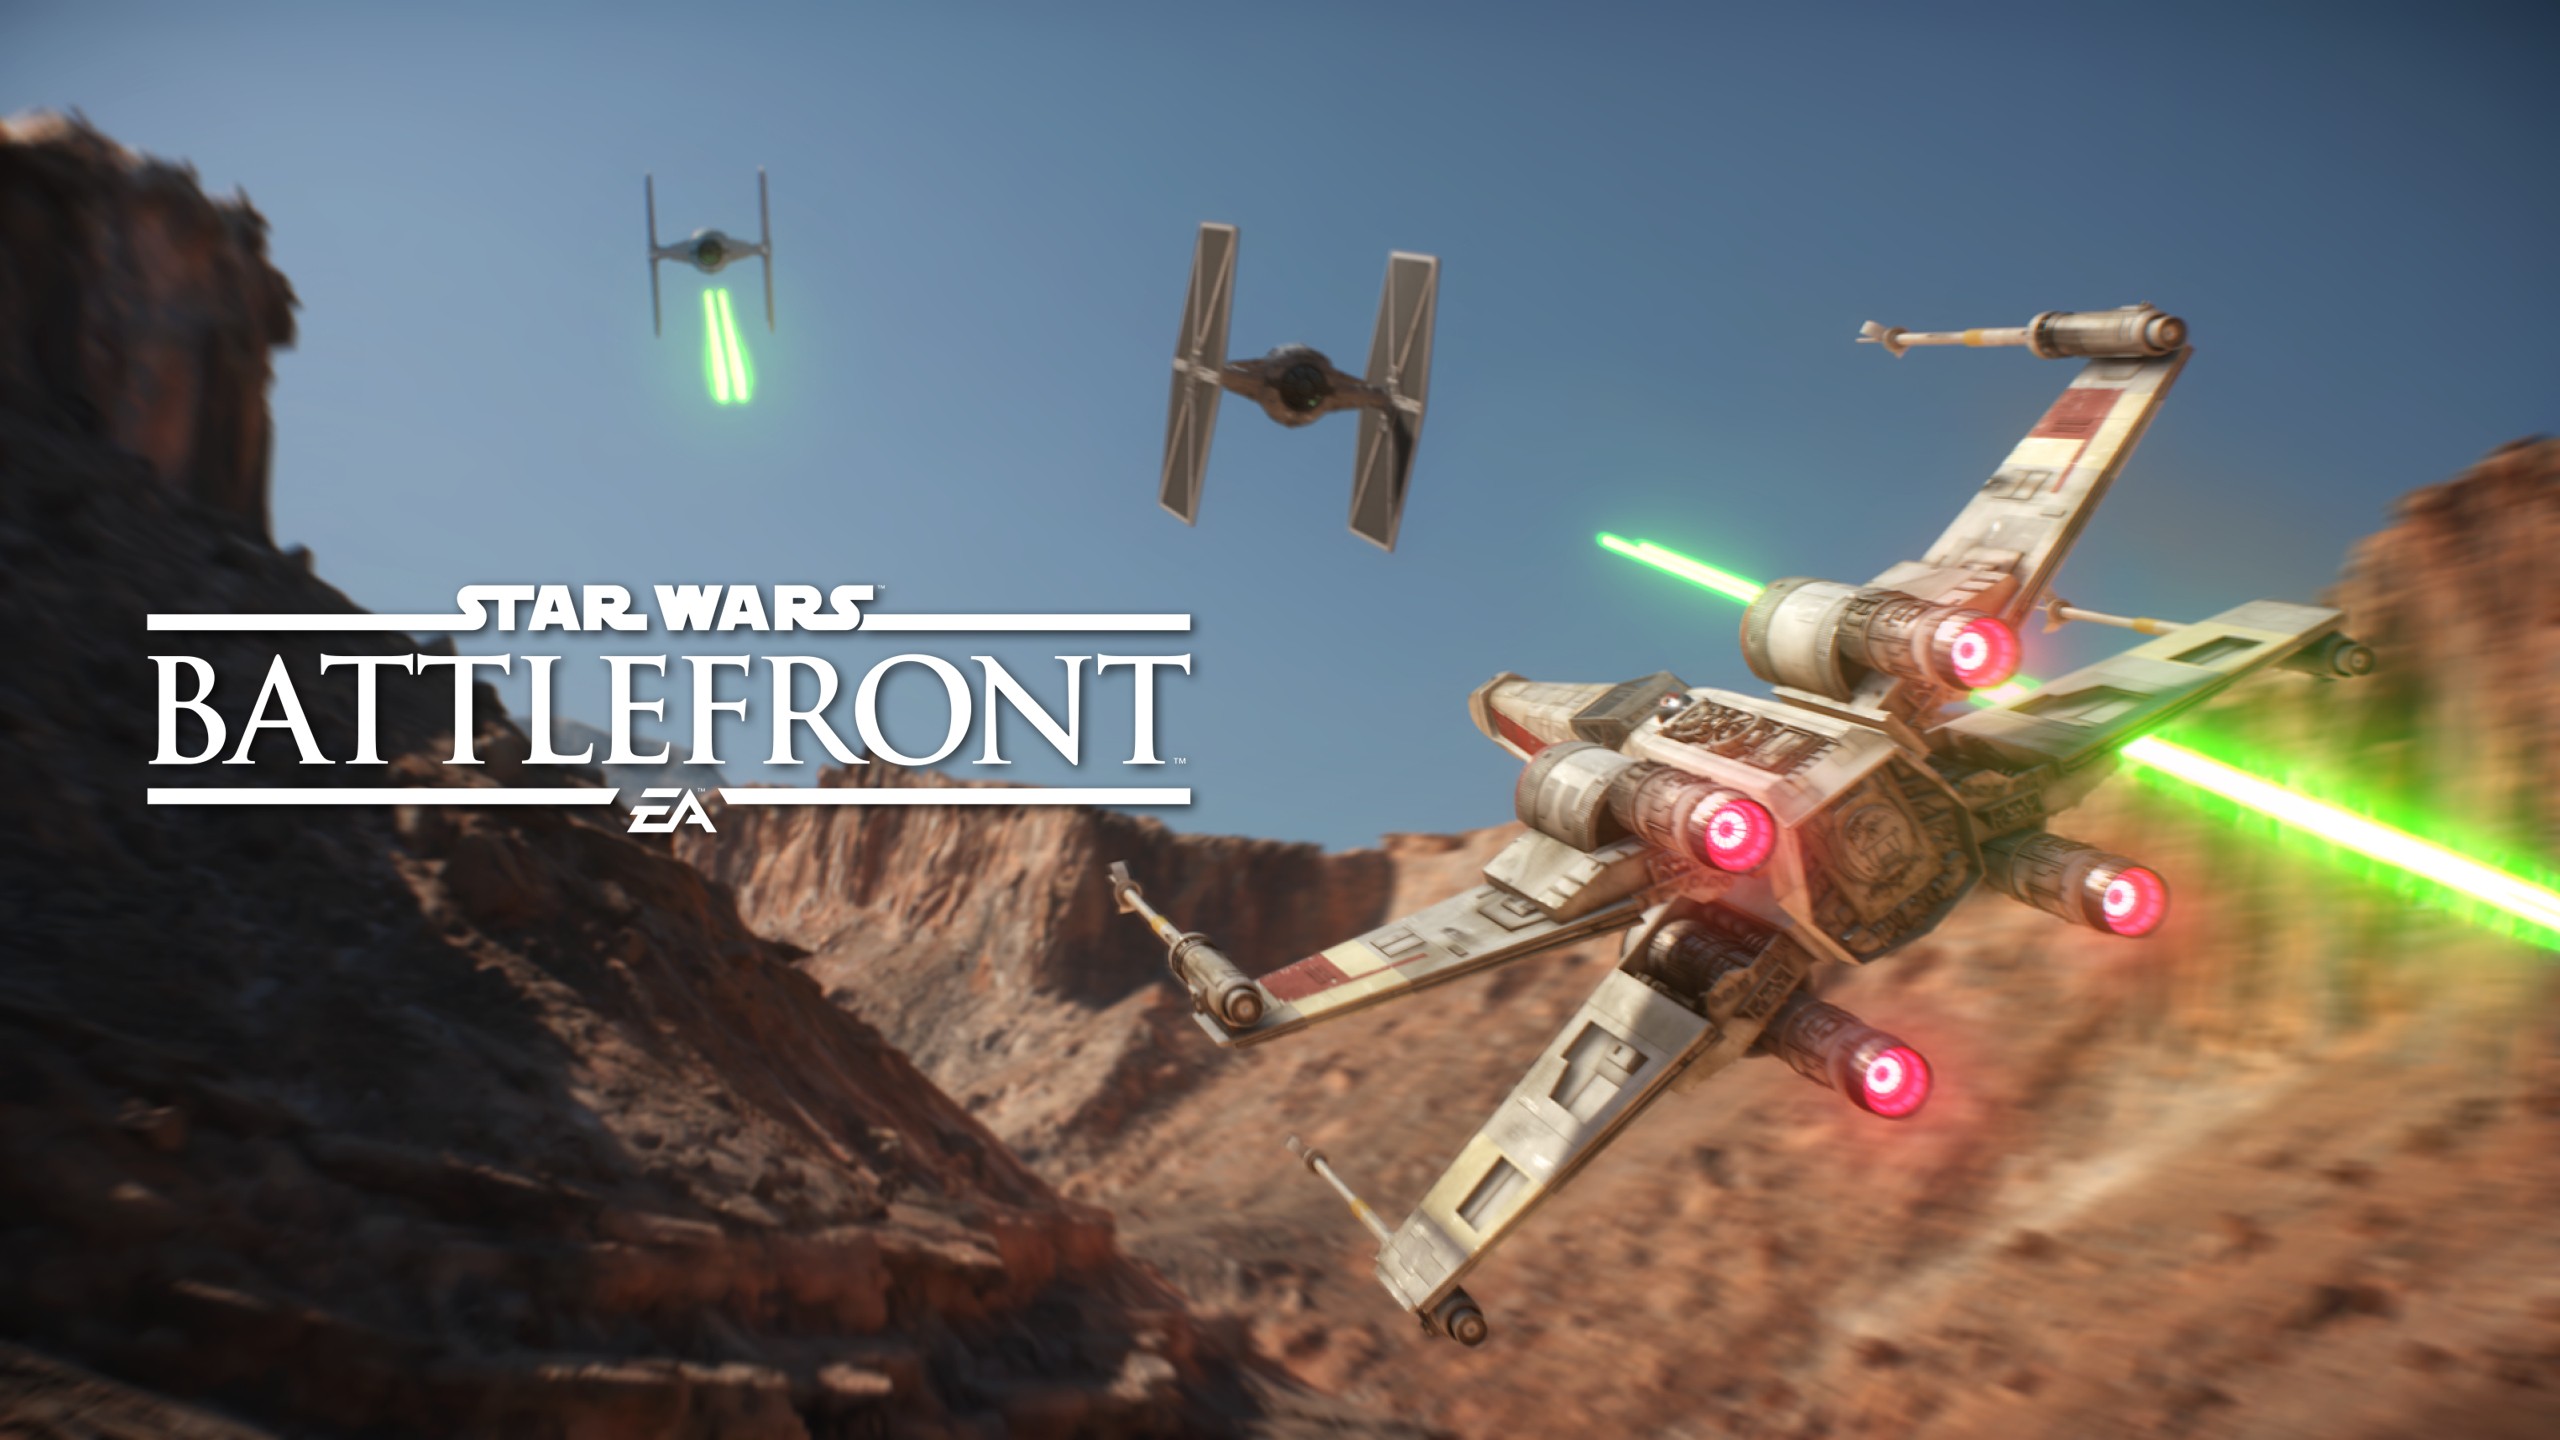 Star Wars Battlefront EA EA Games PC Gaming Video Games Logo Text 2560x1440